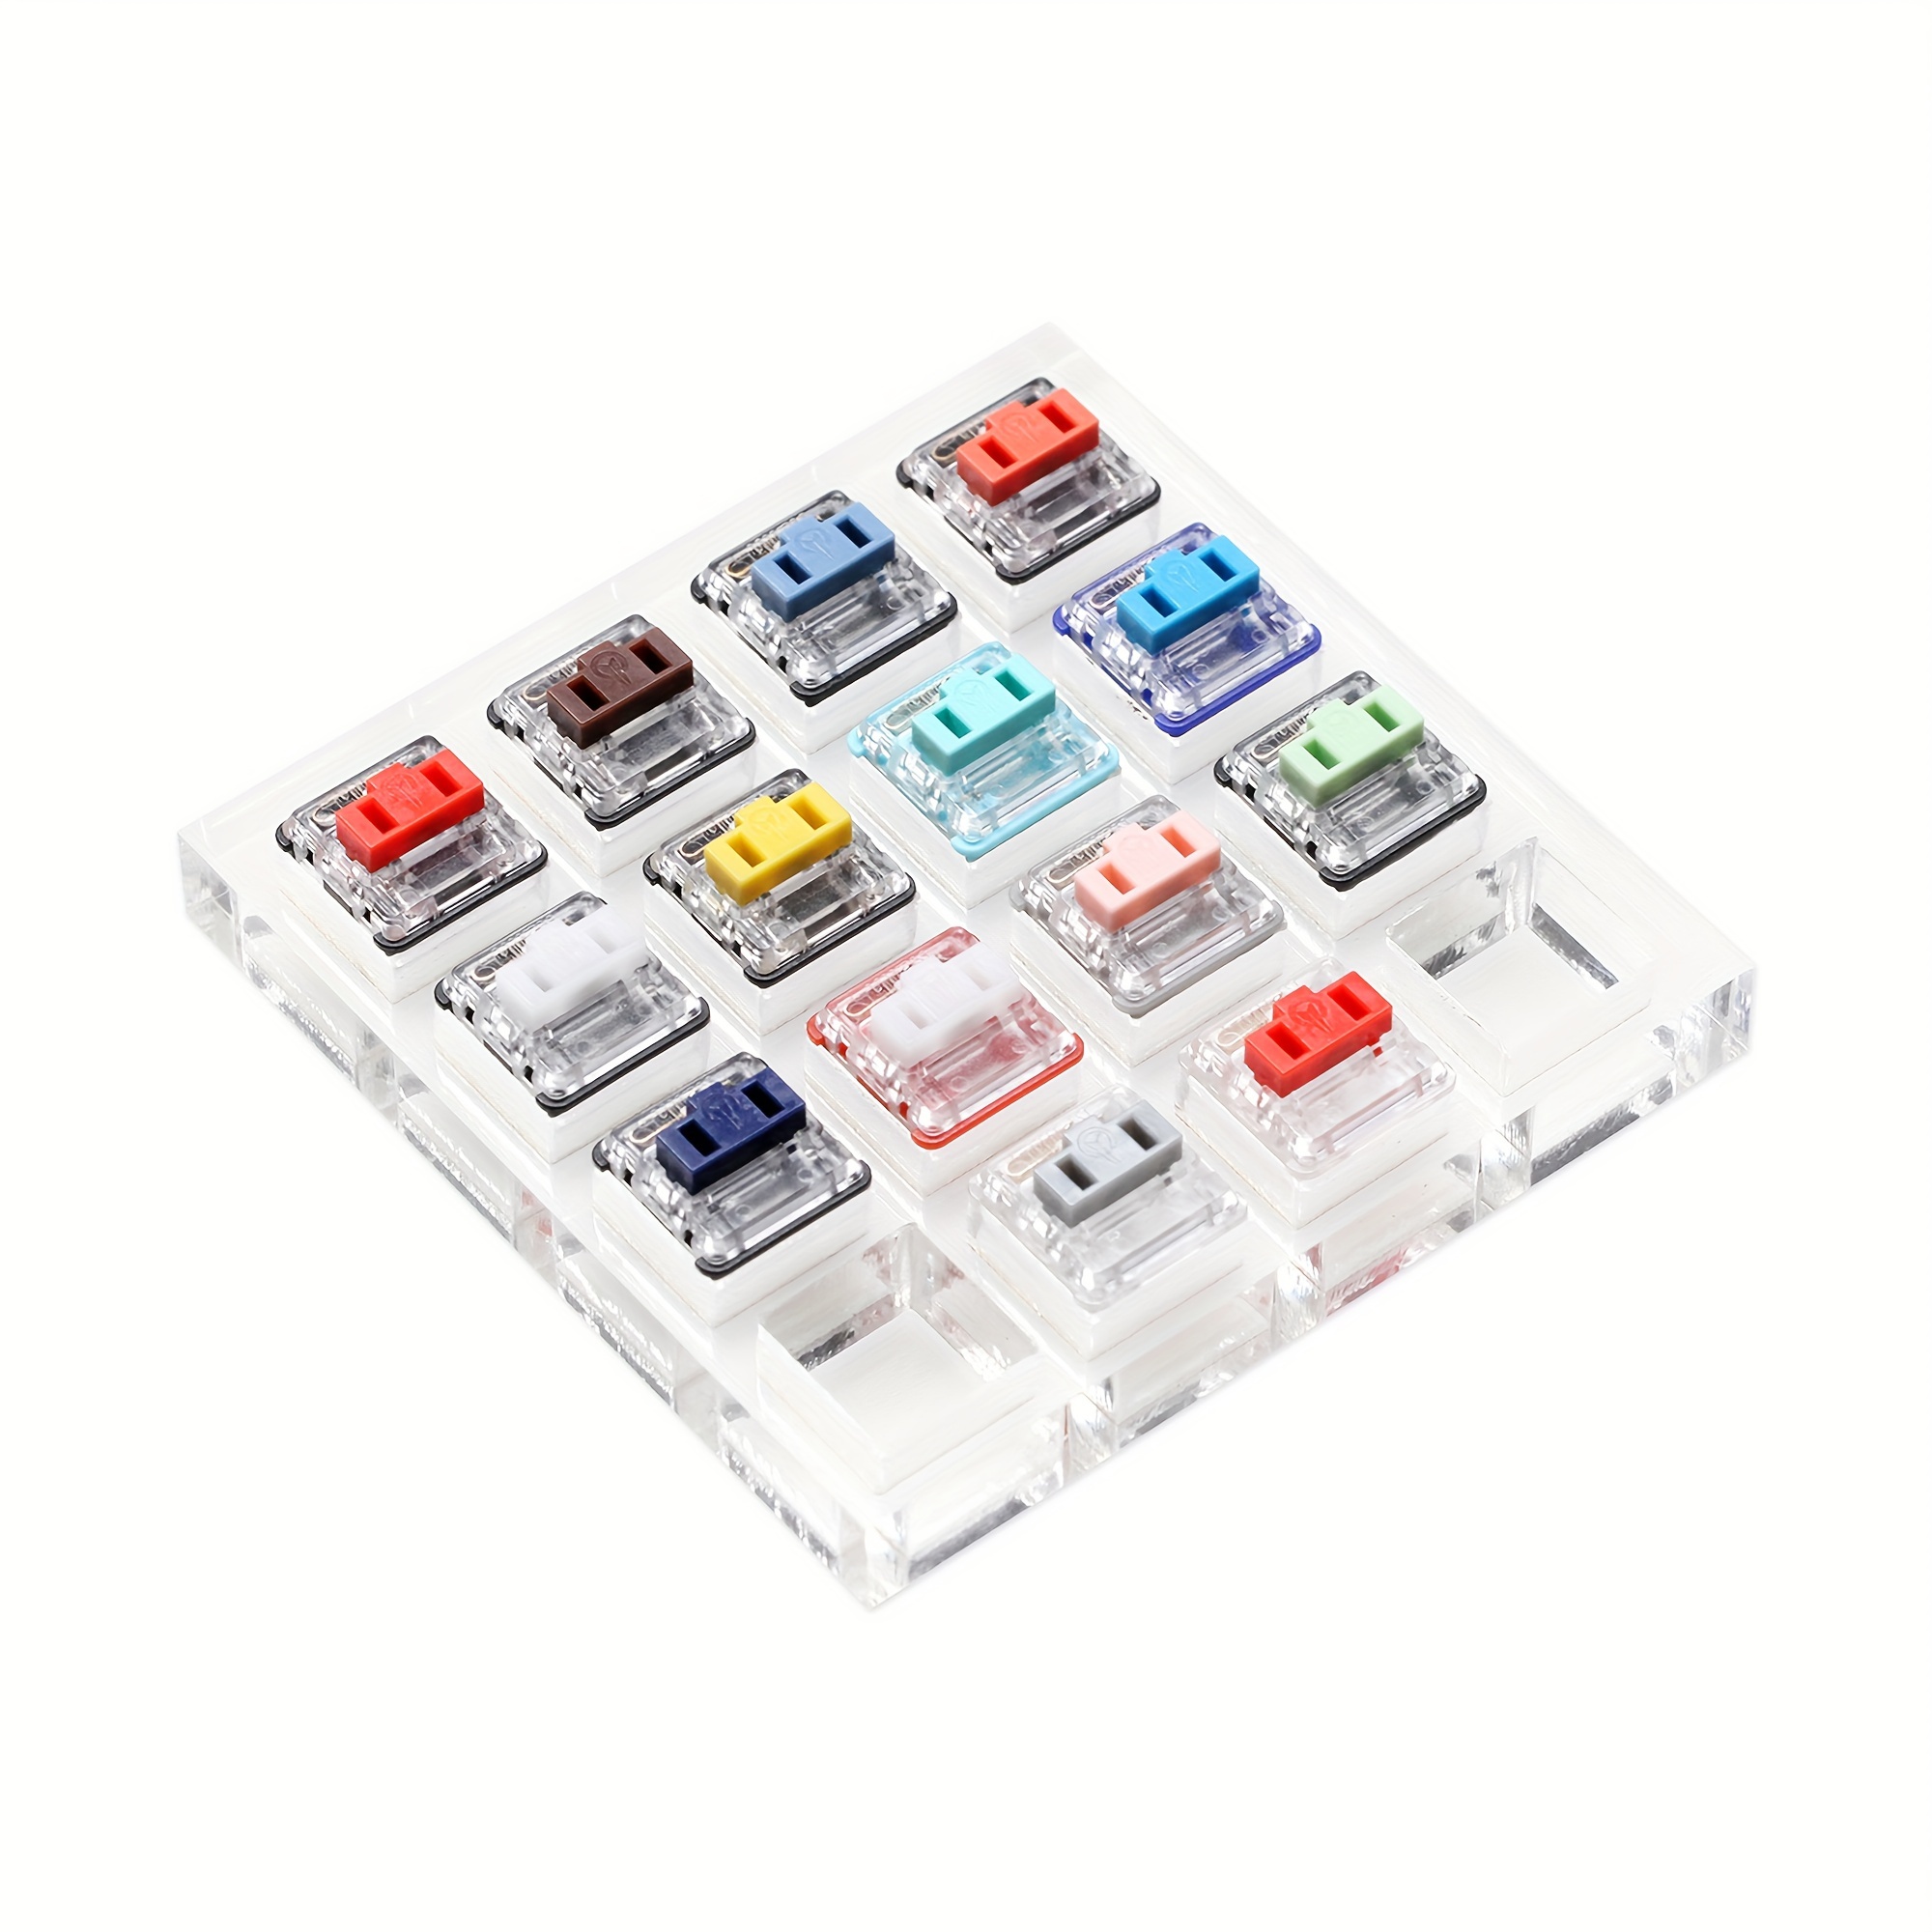 1H-KITHT3 H Series OVEN CURE 3 Color Starter Kit (Tester) $179.95